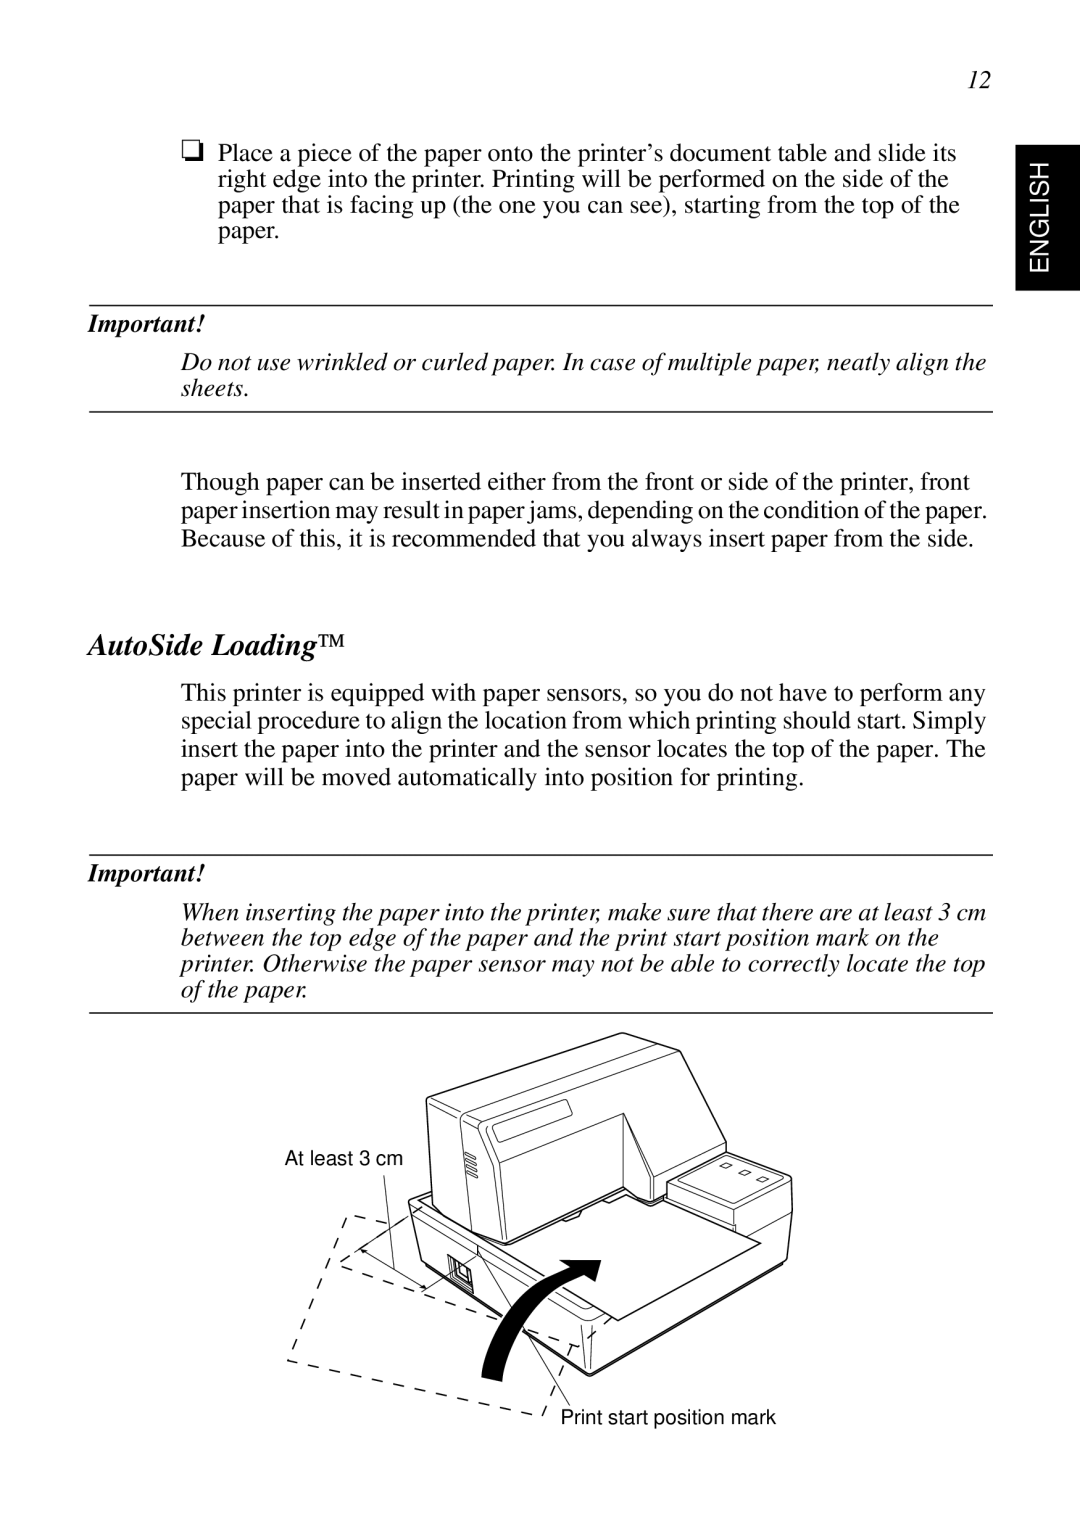 Star Micronics SP298 user manual AutoSide Loading, English, At least 3 cm, Print start position mark 